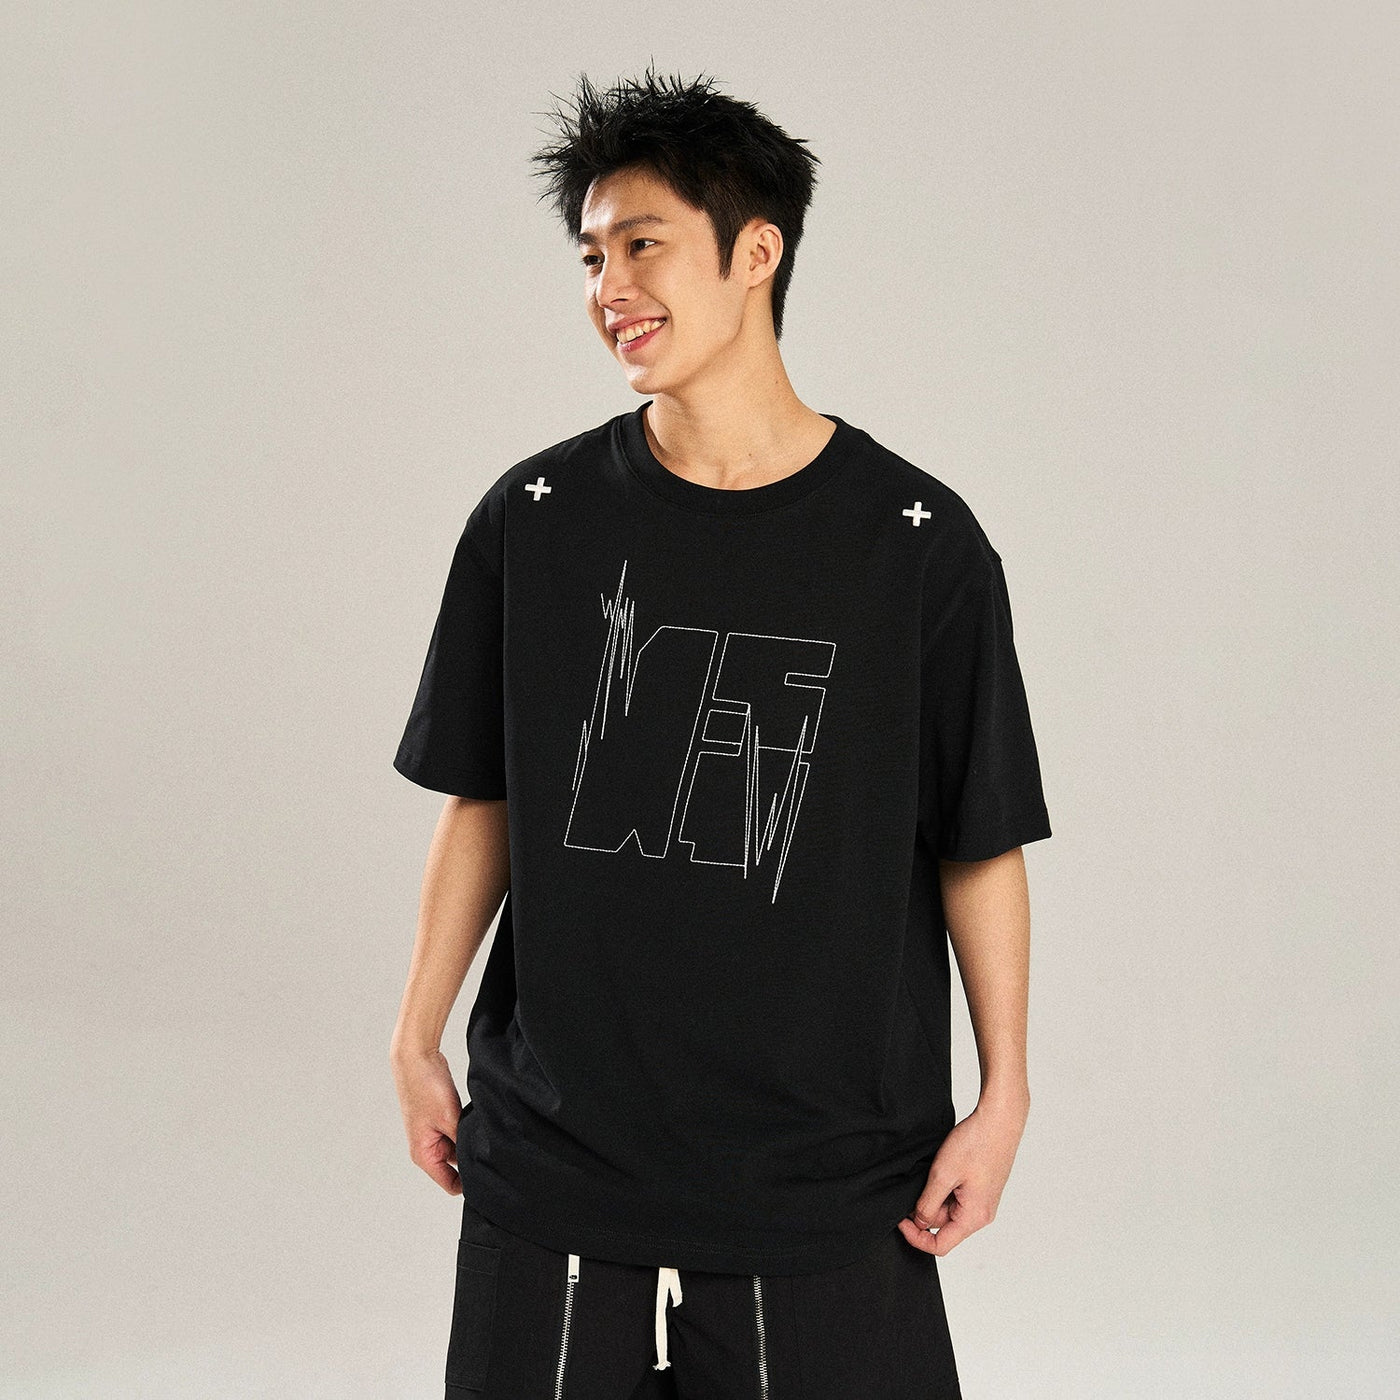 Thin Stitch Logo T-Shirt Korean Street Fashion T-Shirt By New Start Shop Online at OH Vault